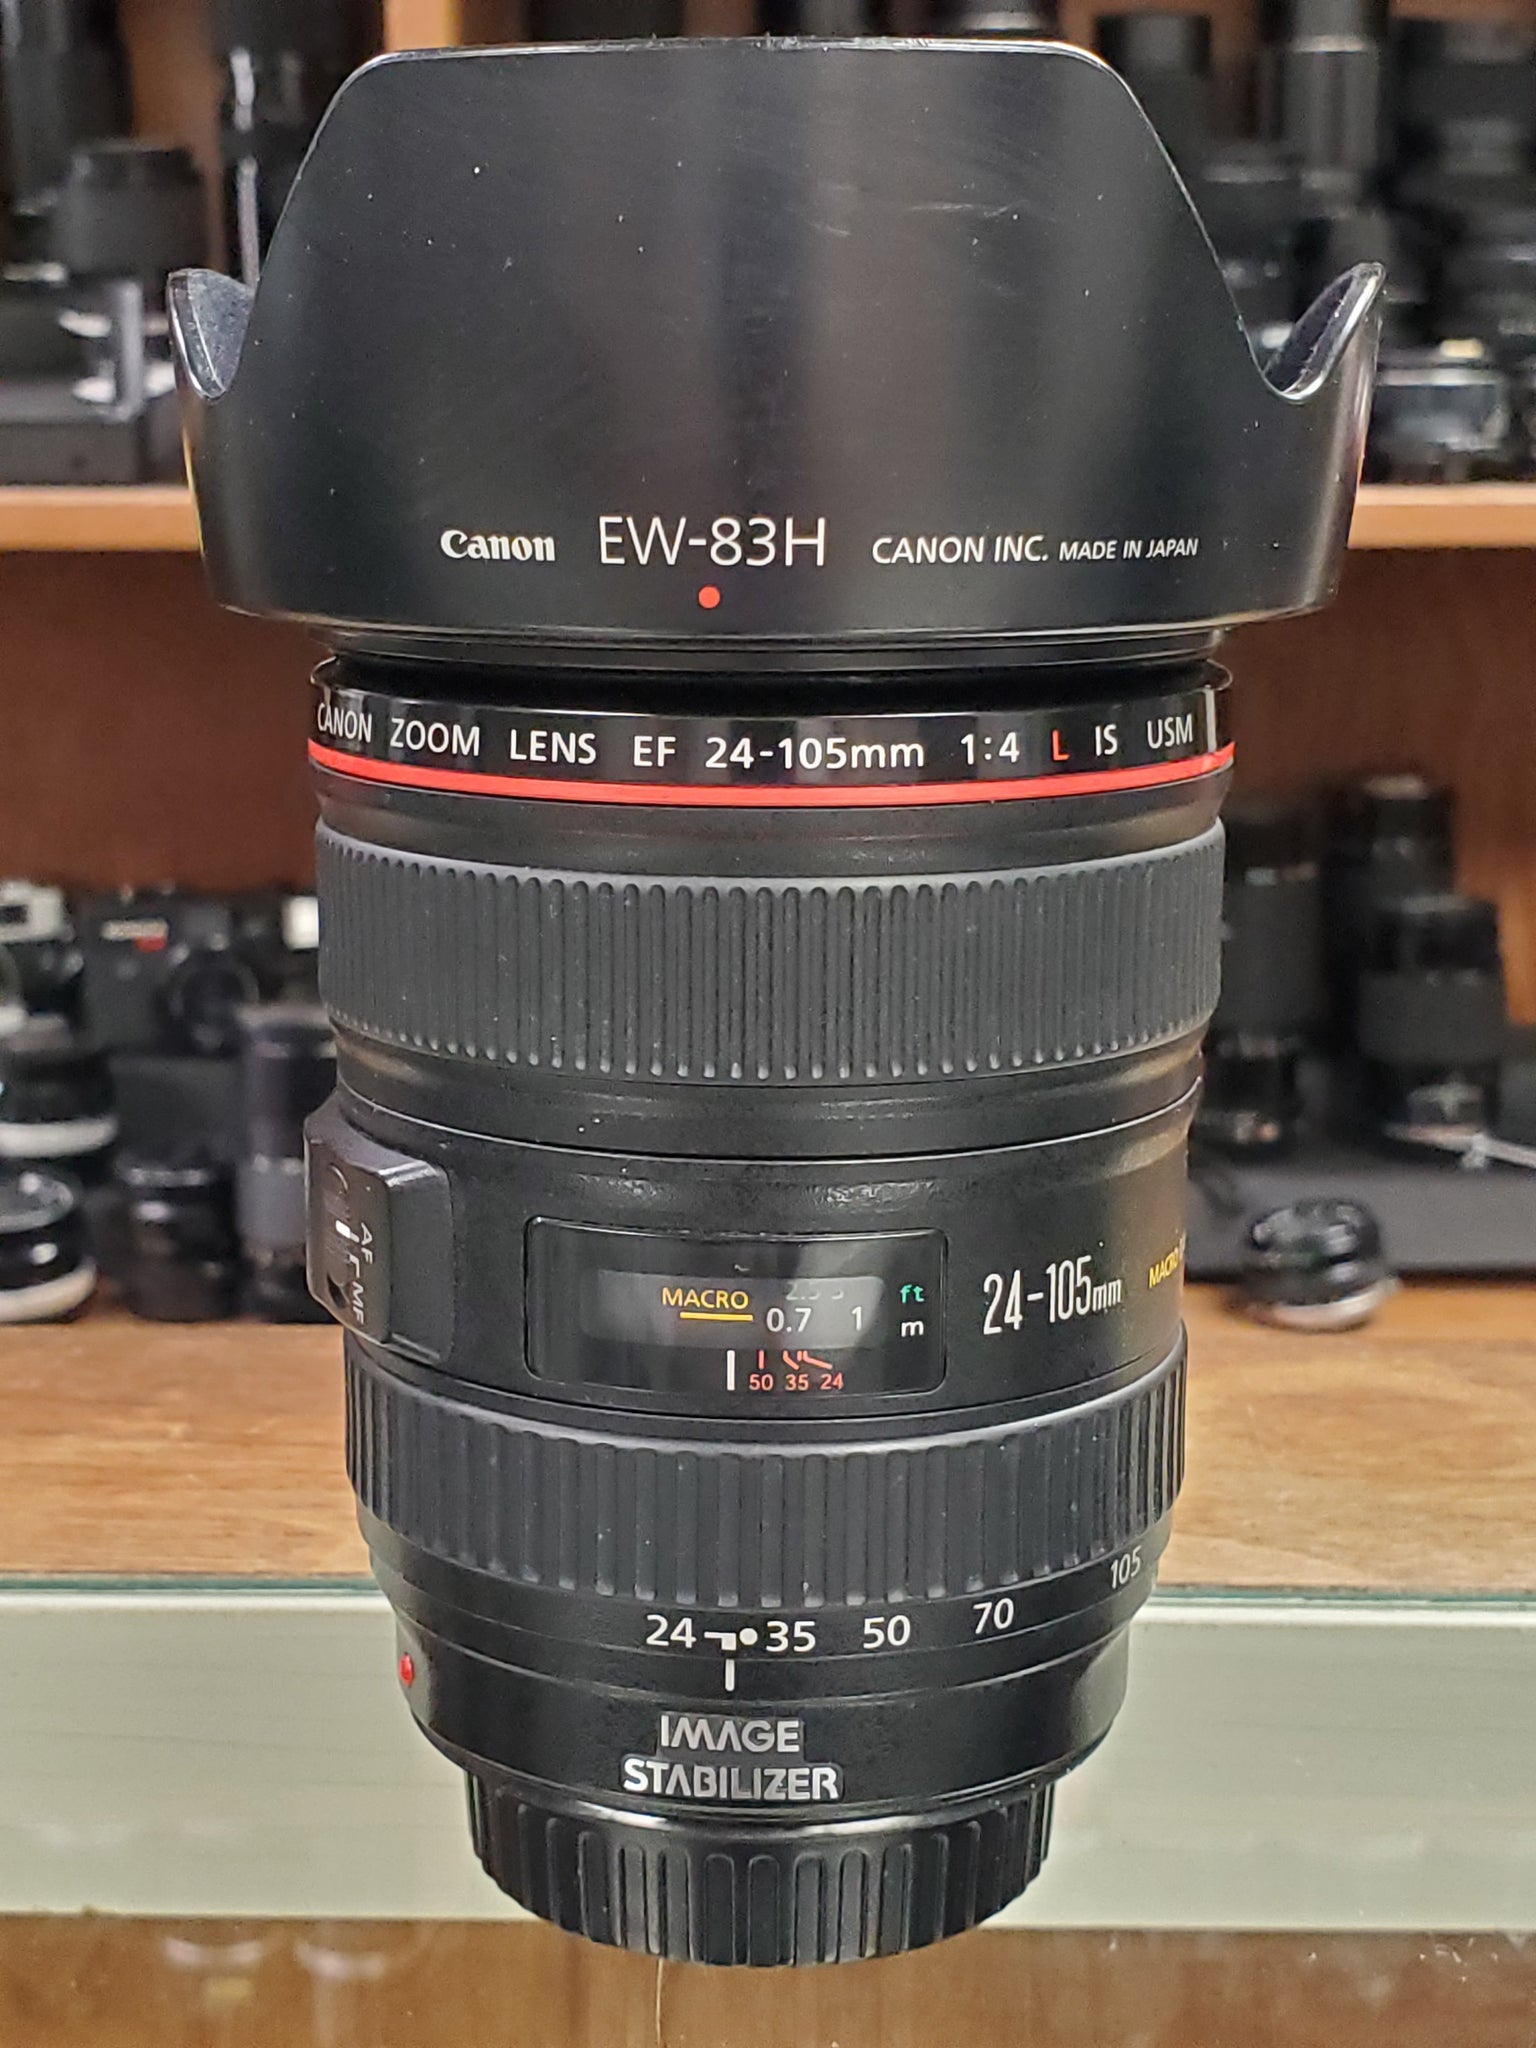 Canon 24-105mm F4L IS USM Zoom lens - Pro Full Frame - Used